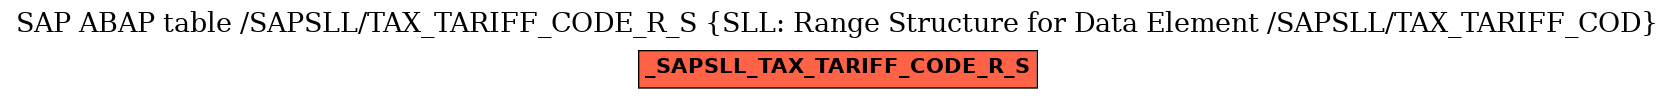 E-R Diagram for table /SAPSLL/TAX_TARIFF_CODE_R_S (SLL: Range Structure for Data Element /SAPSLL/TAX_TARIFF_COD)